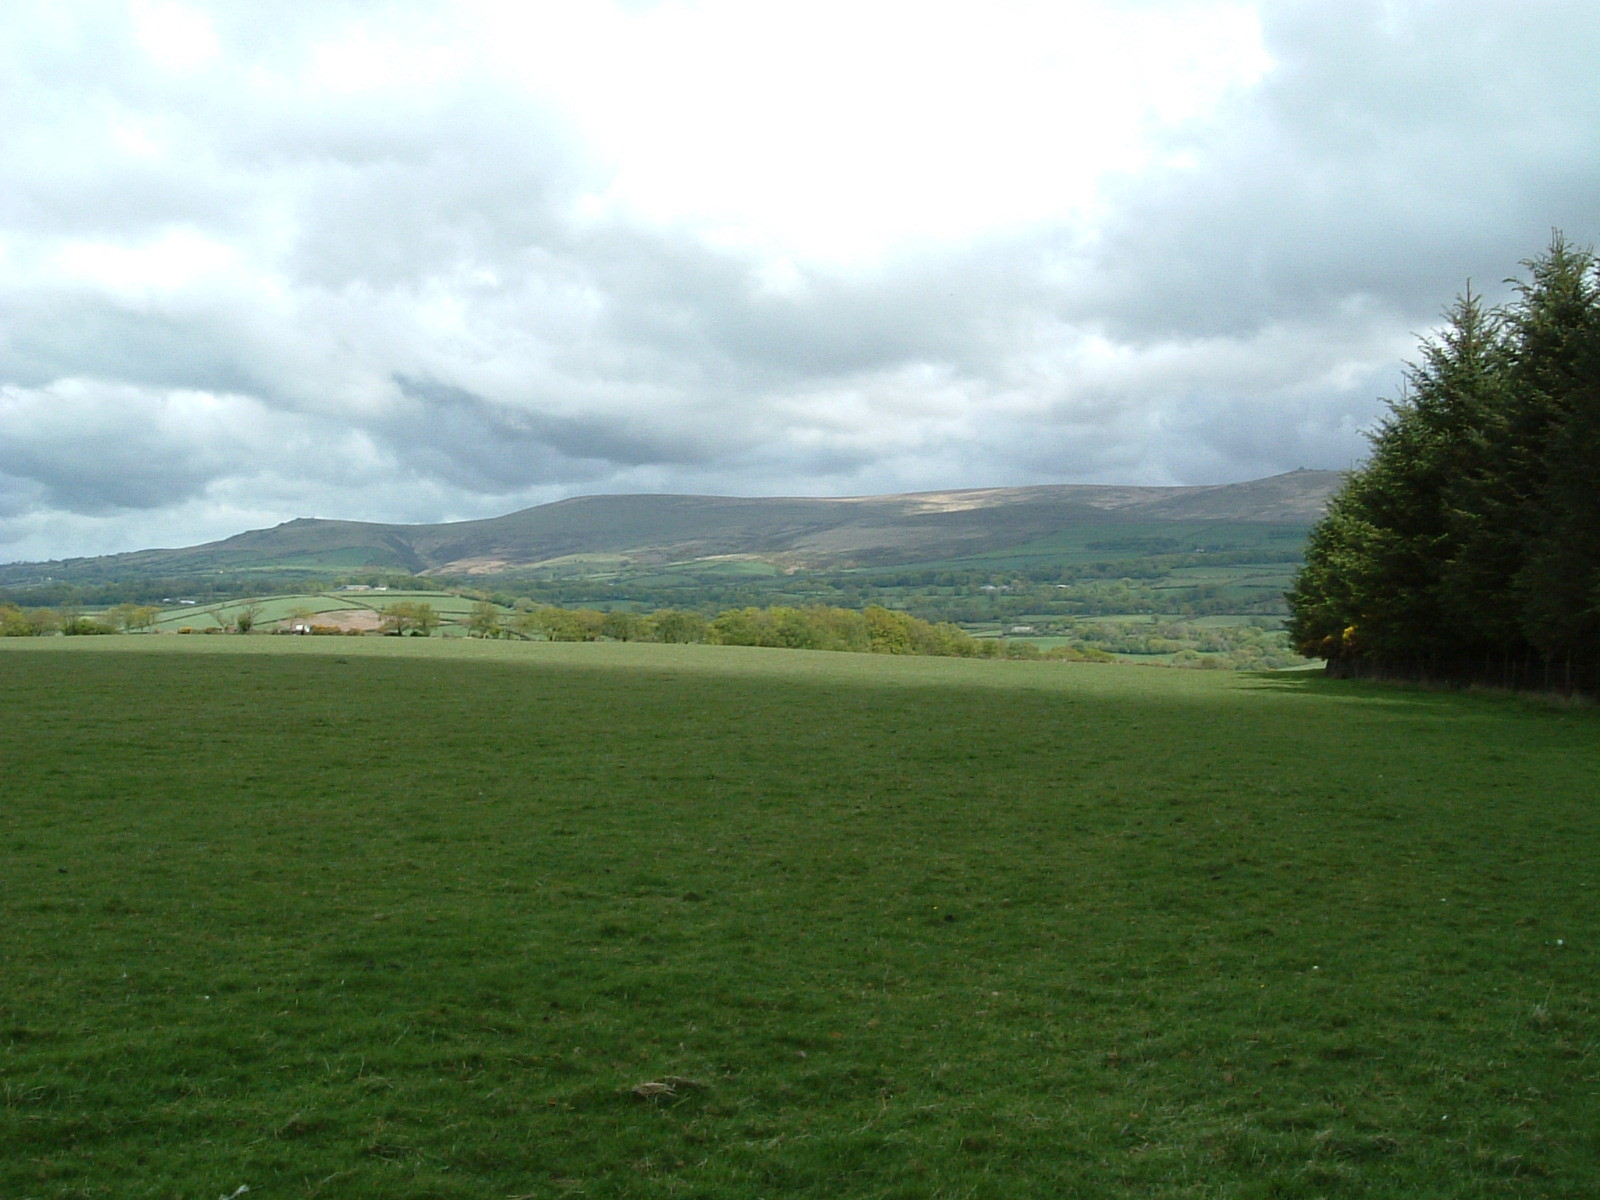 Dartmoor seen from a distance